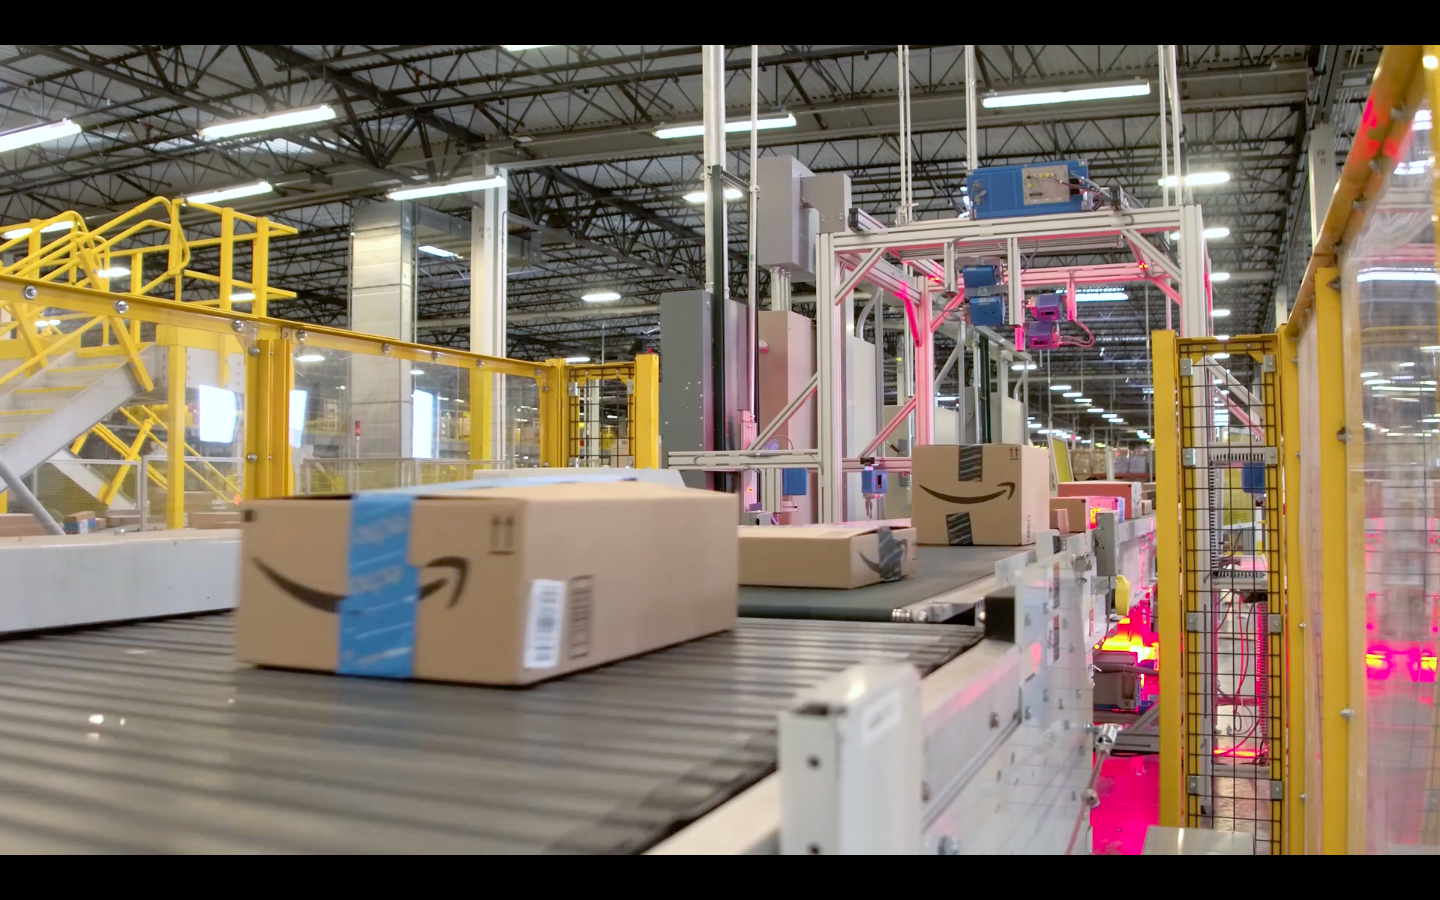 A conveyor belt in an Amazon fulfillment center warehouse moves boxes